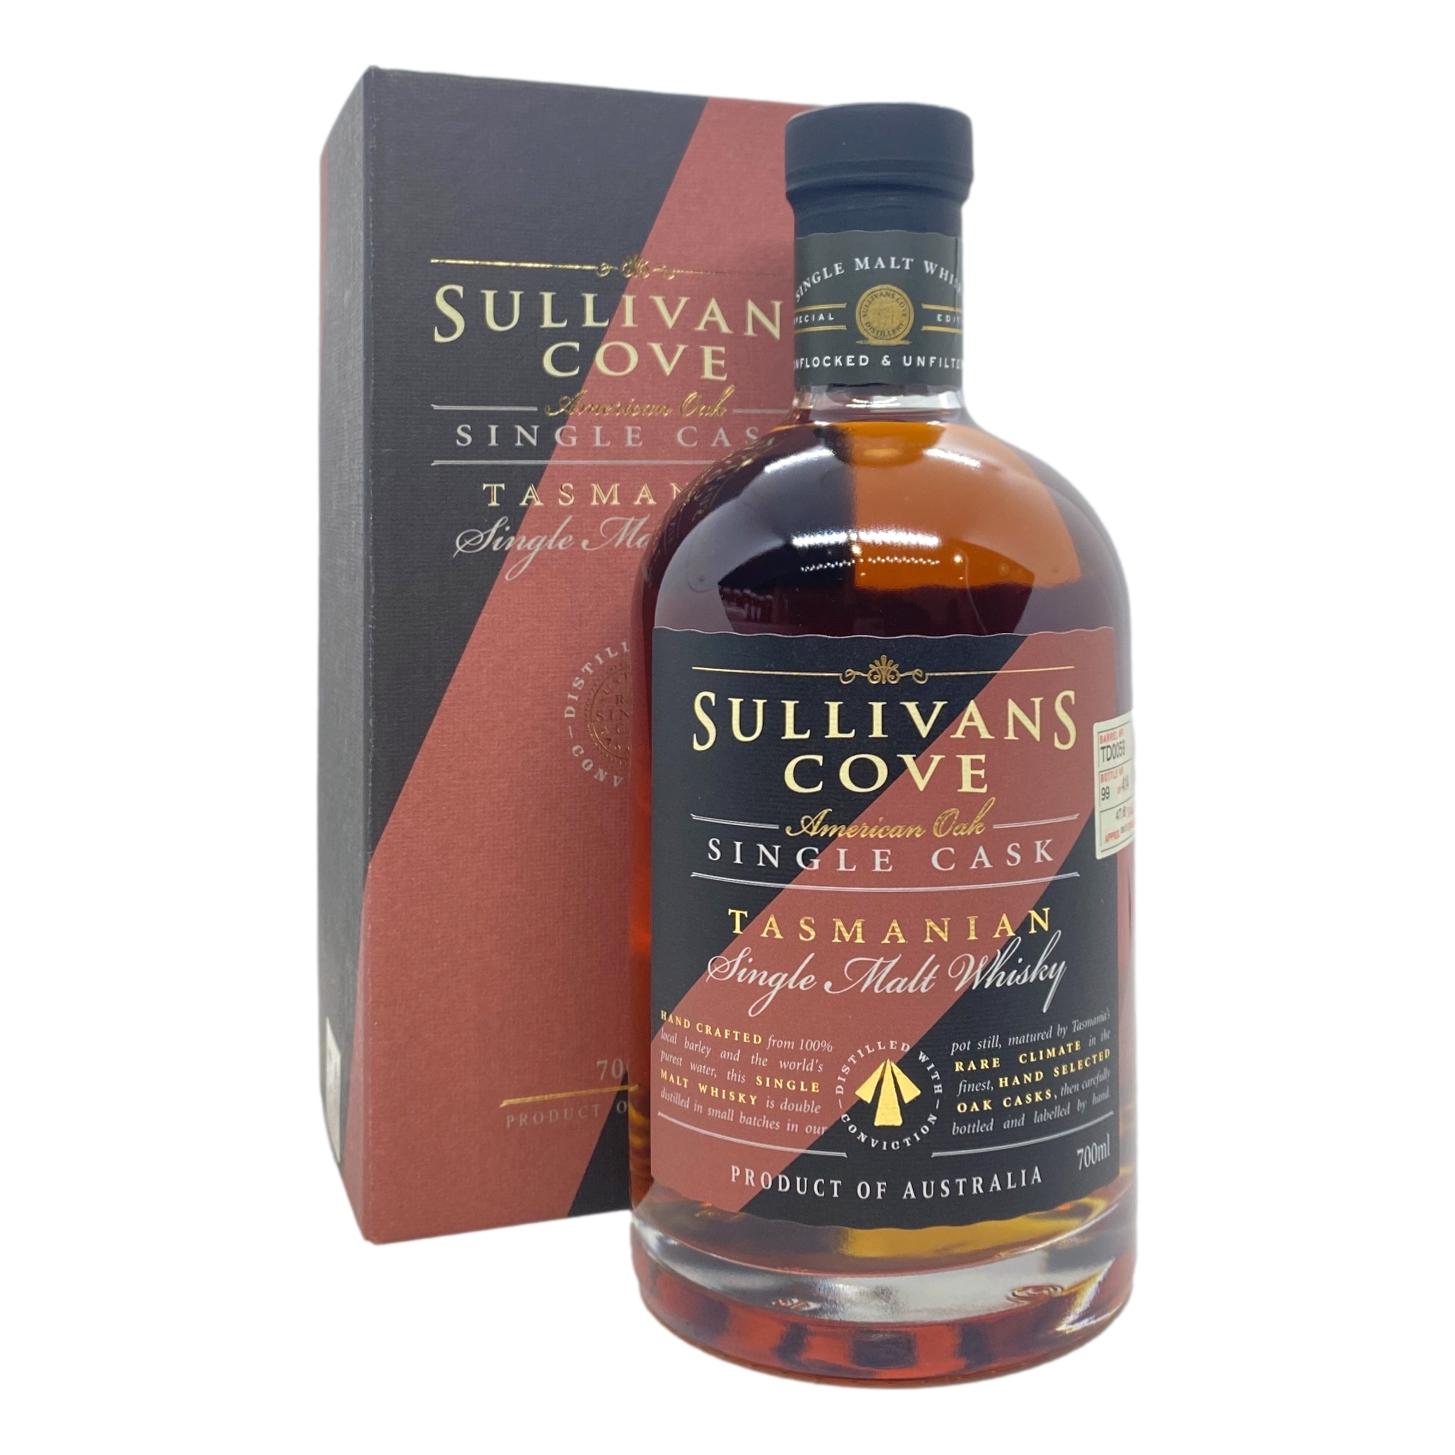 Sullivans Cove Single Cask (TD0307) American Oak Second Fill Single Malt Australian Whisky 700ml